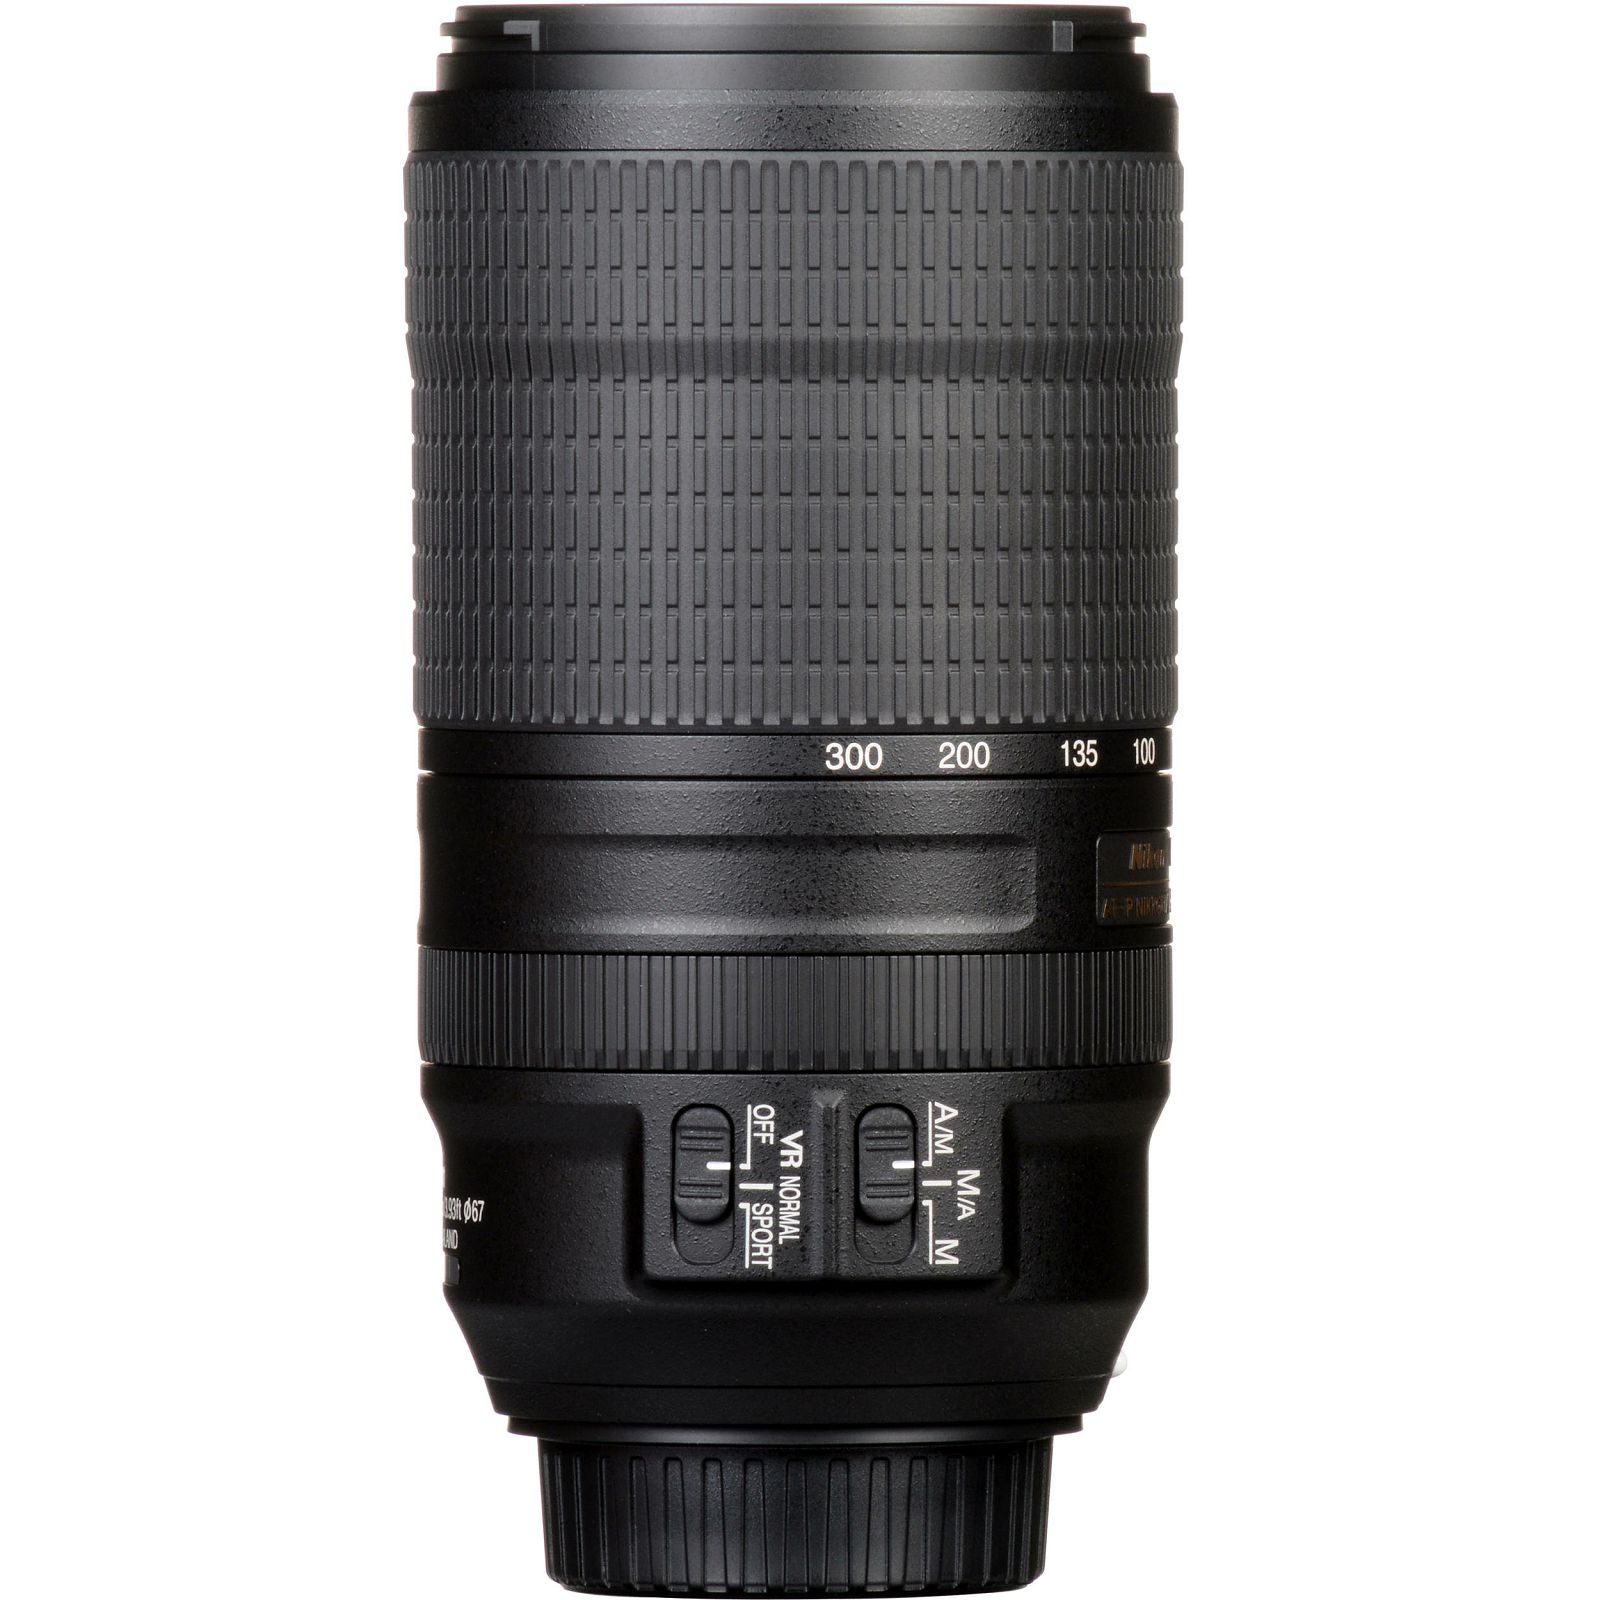 Nikon AF-P 70-300mm f/4.5-5.6E ED VR FX telefoto objektiv Nikkor auto focus lens (JAA833DA)